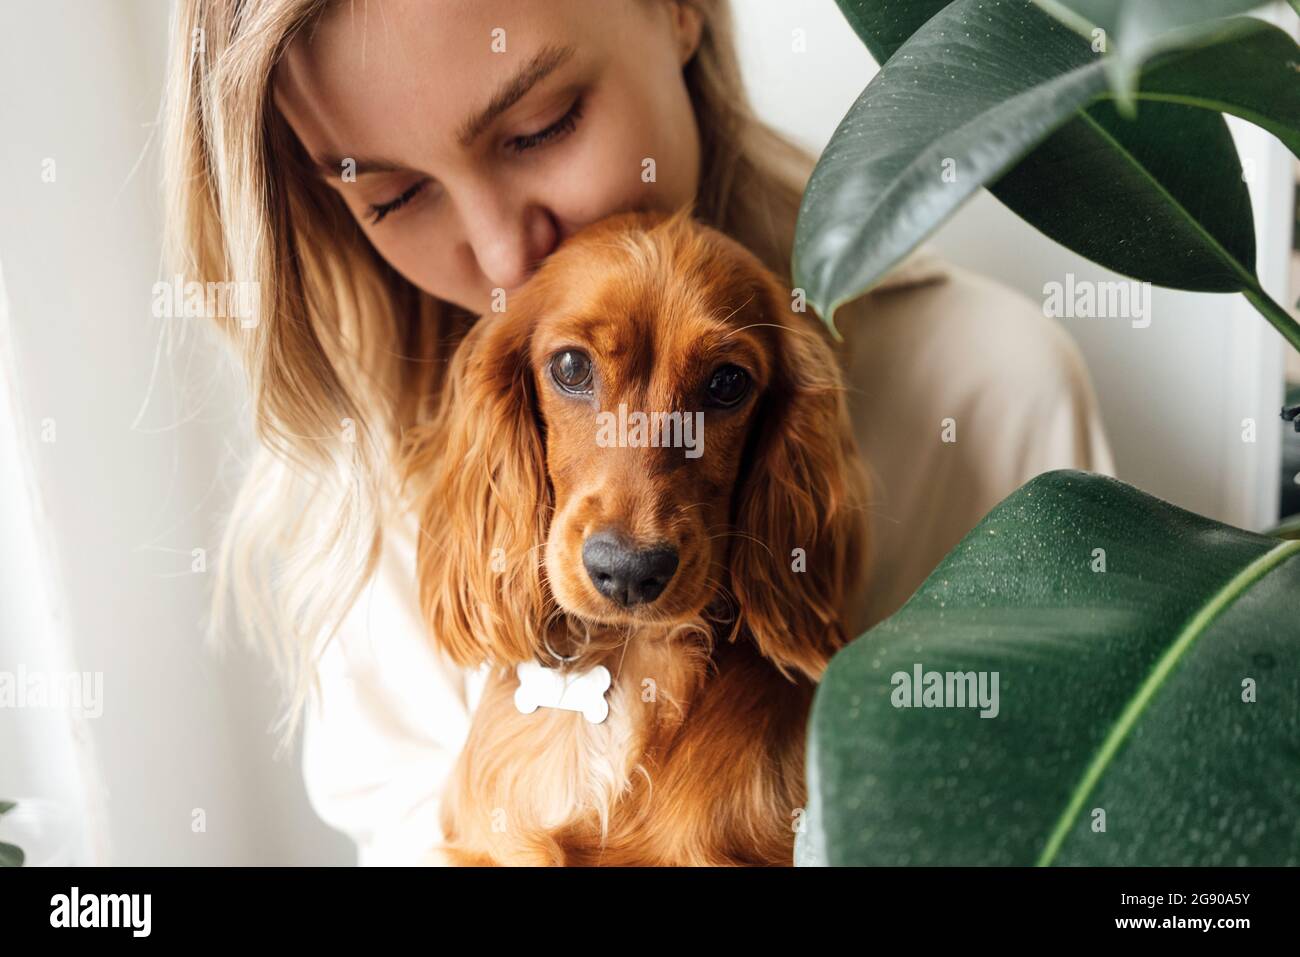 Woman kissing Cocker Spaniel dog at home Stock Photo